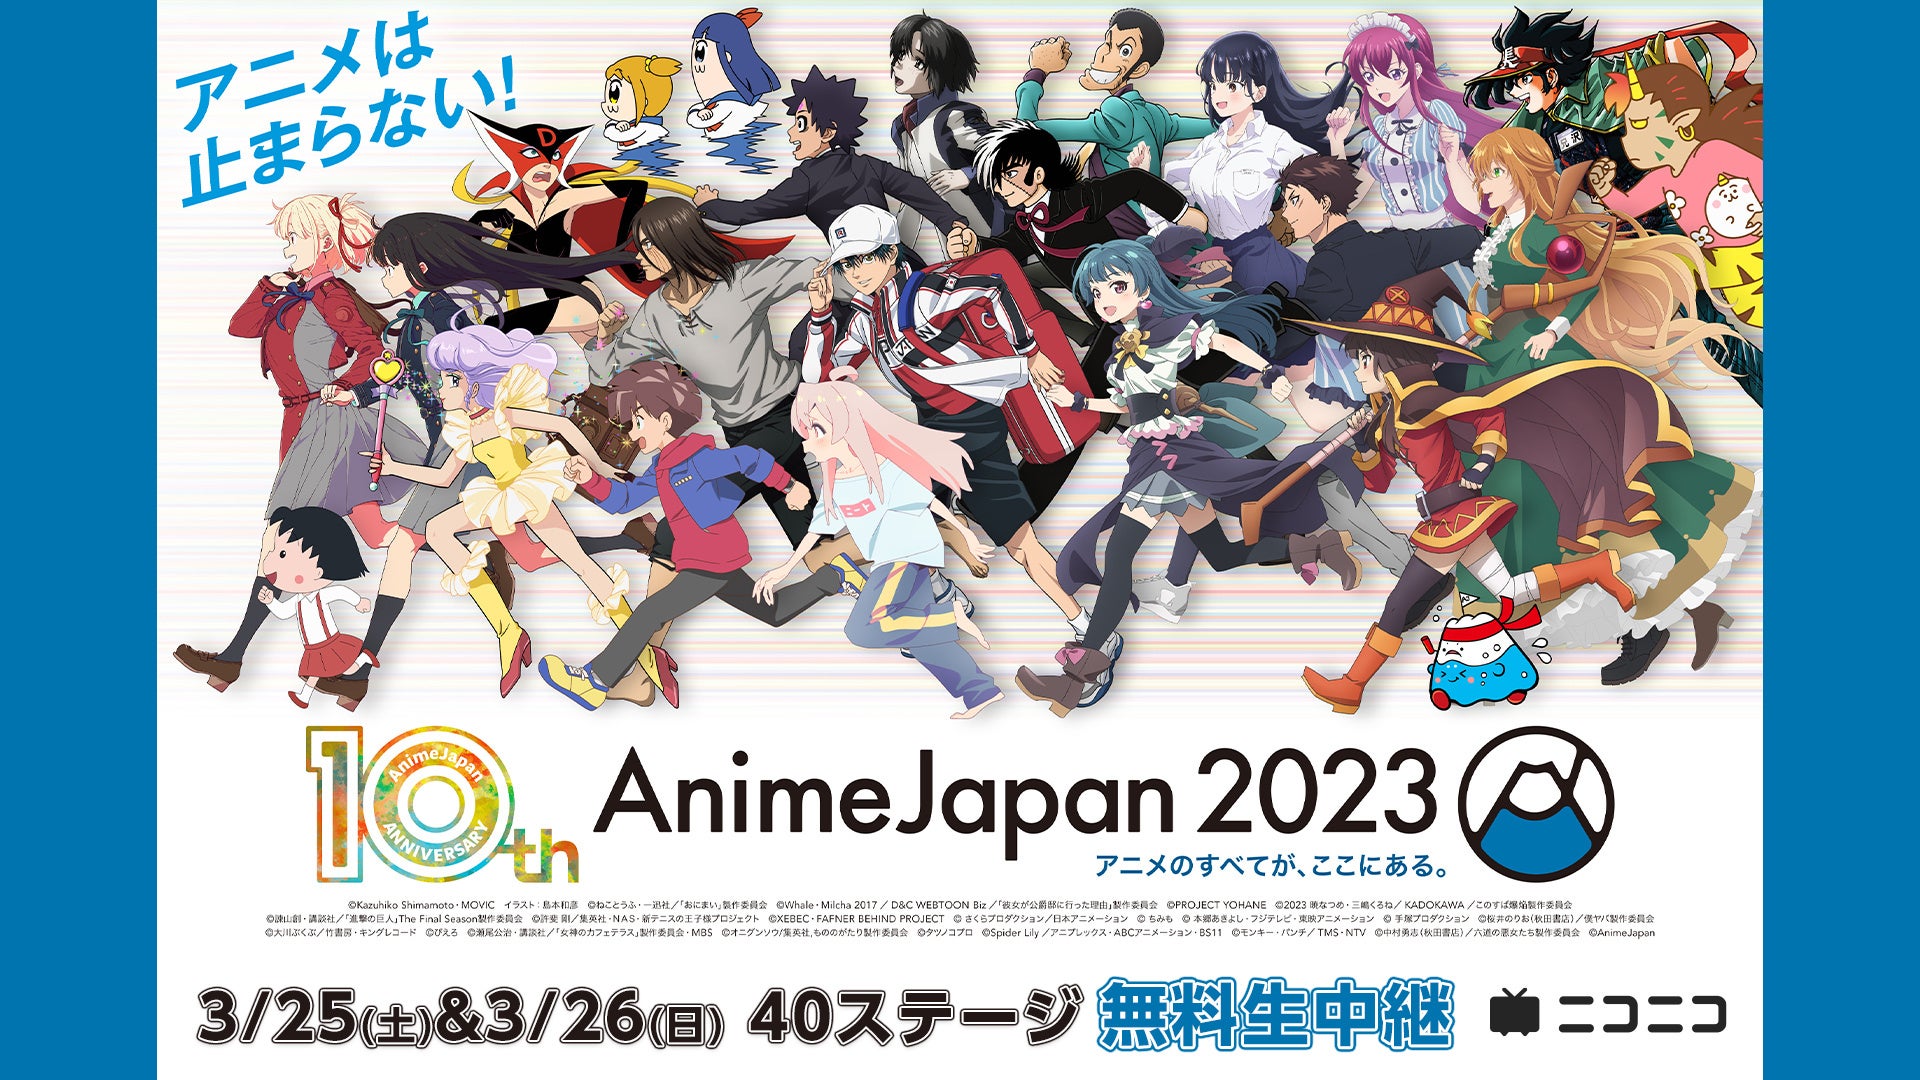 DMM TV「AnimeJapan 2023」出展決定！雨宮天、内田理央、生駒里奈、下野紘、杉田智和など番組出演者や豪華声優陣が登壇するステージコンテンツも